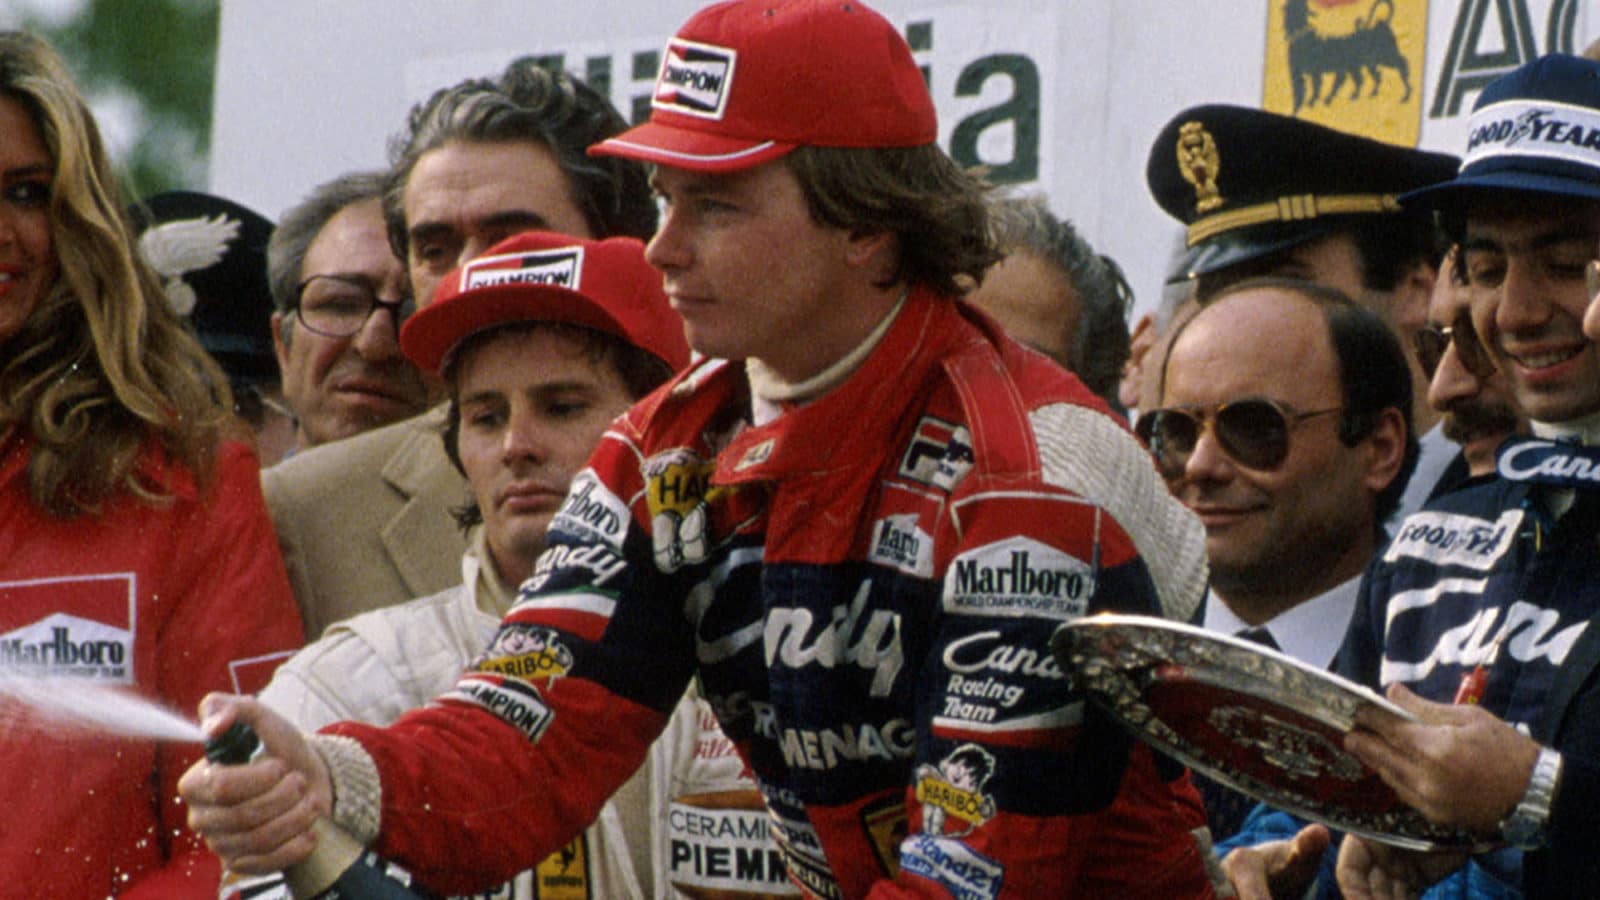 Pironi sprays champagne at 1982 San Marino Grand Prix